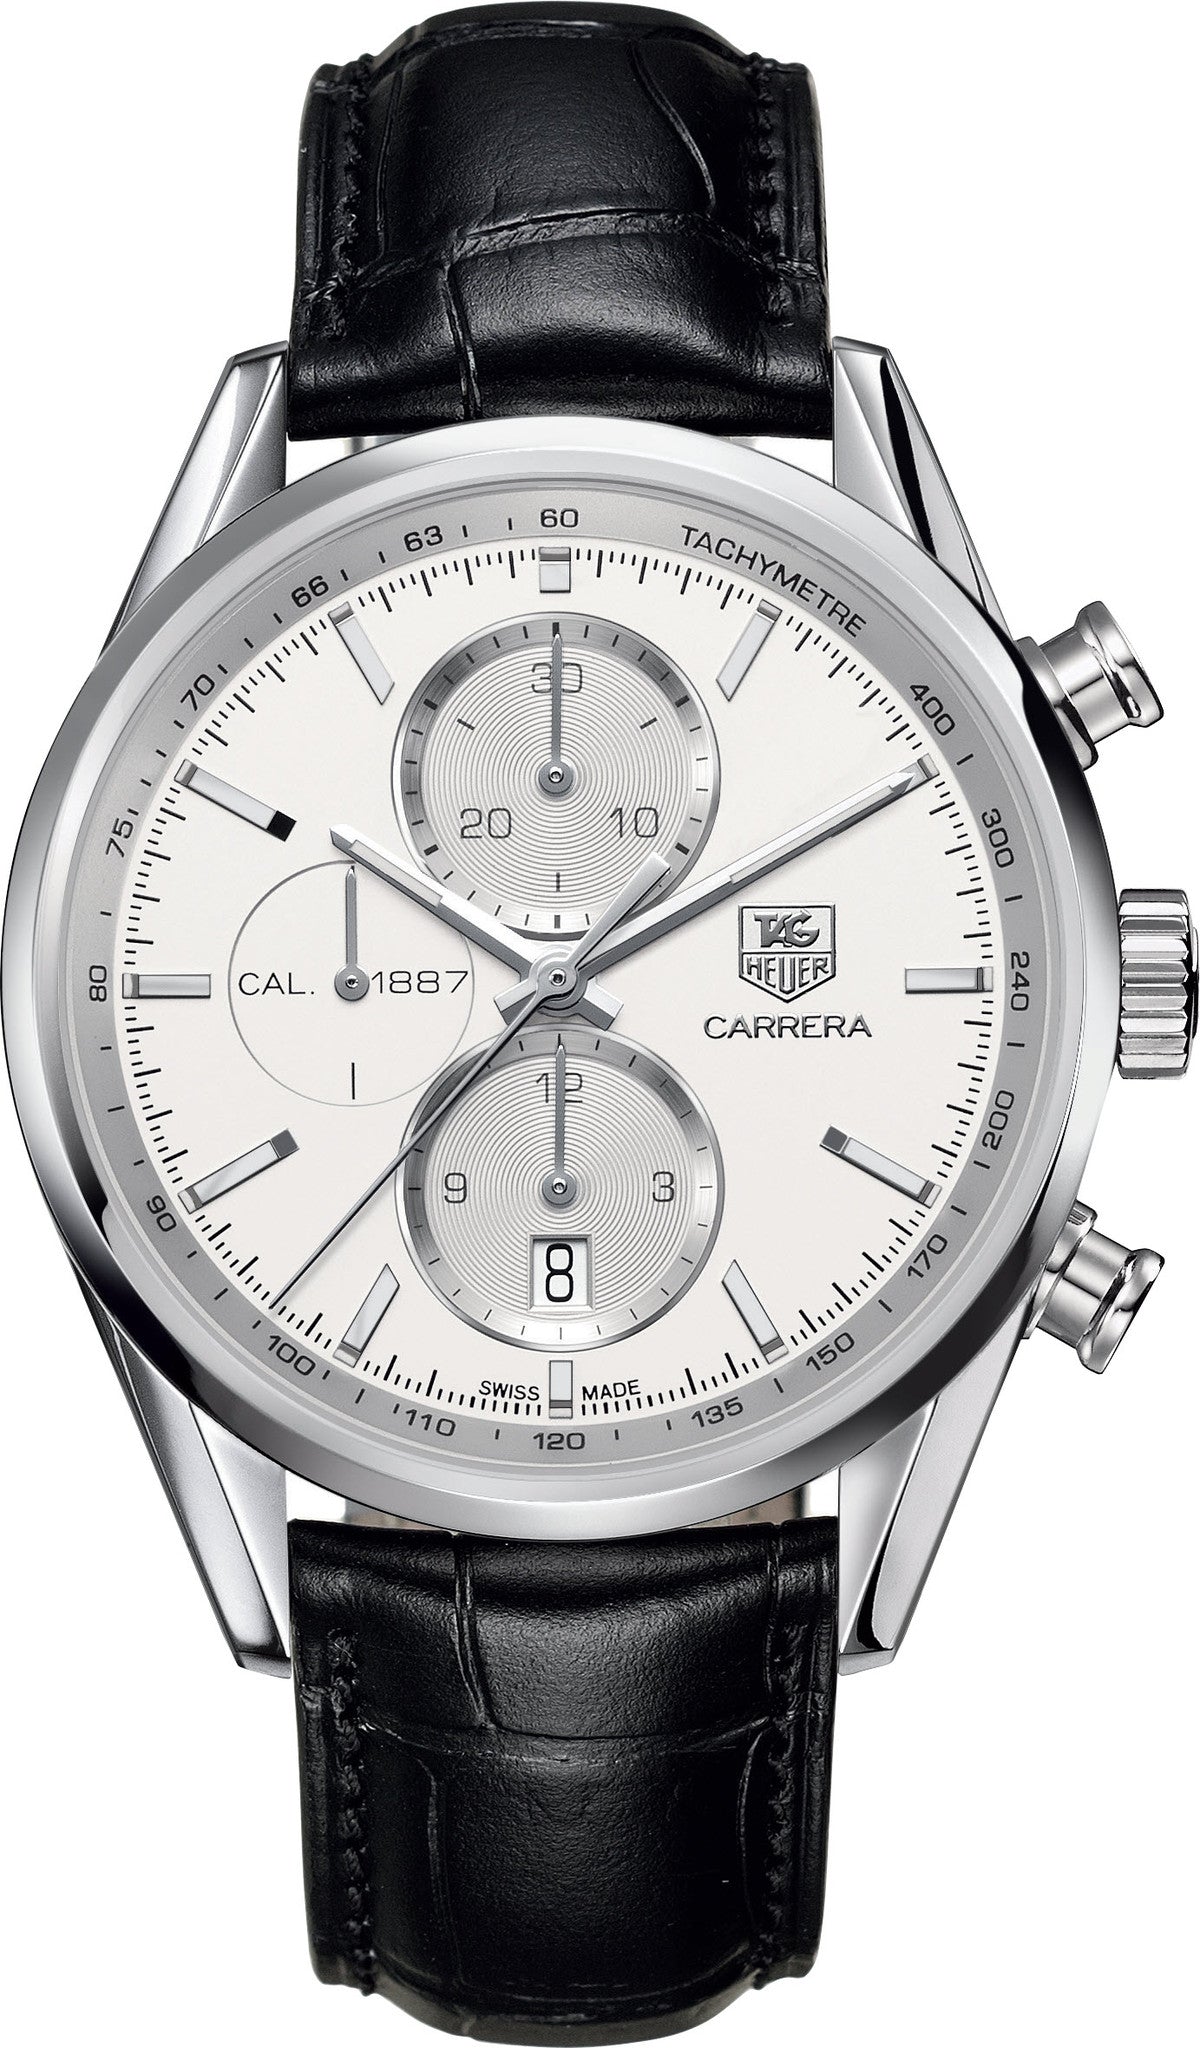 Photos - Wrist Watch TAG Heuer Watch Carrera Chronograph - Silver TAG-1700 